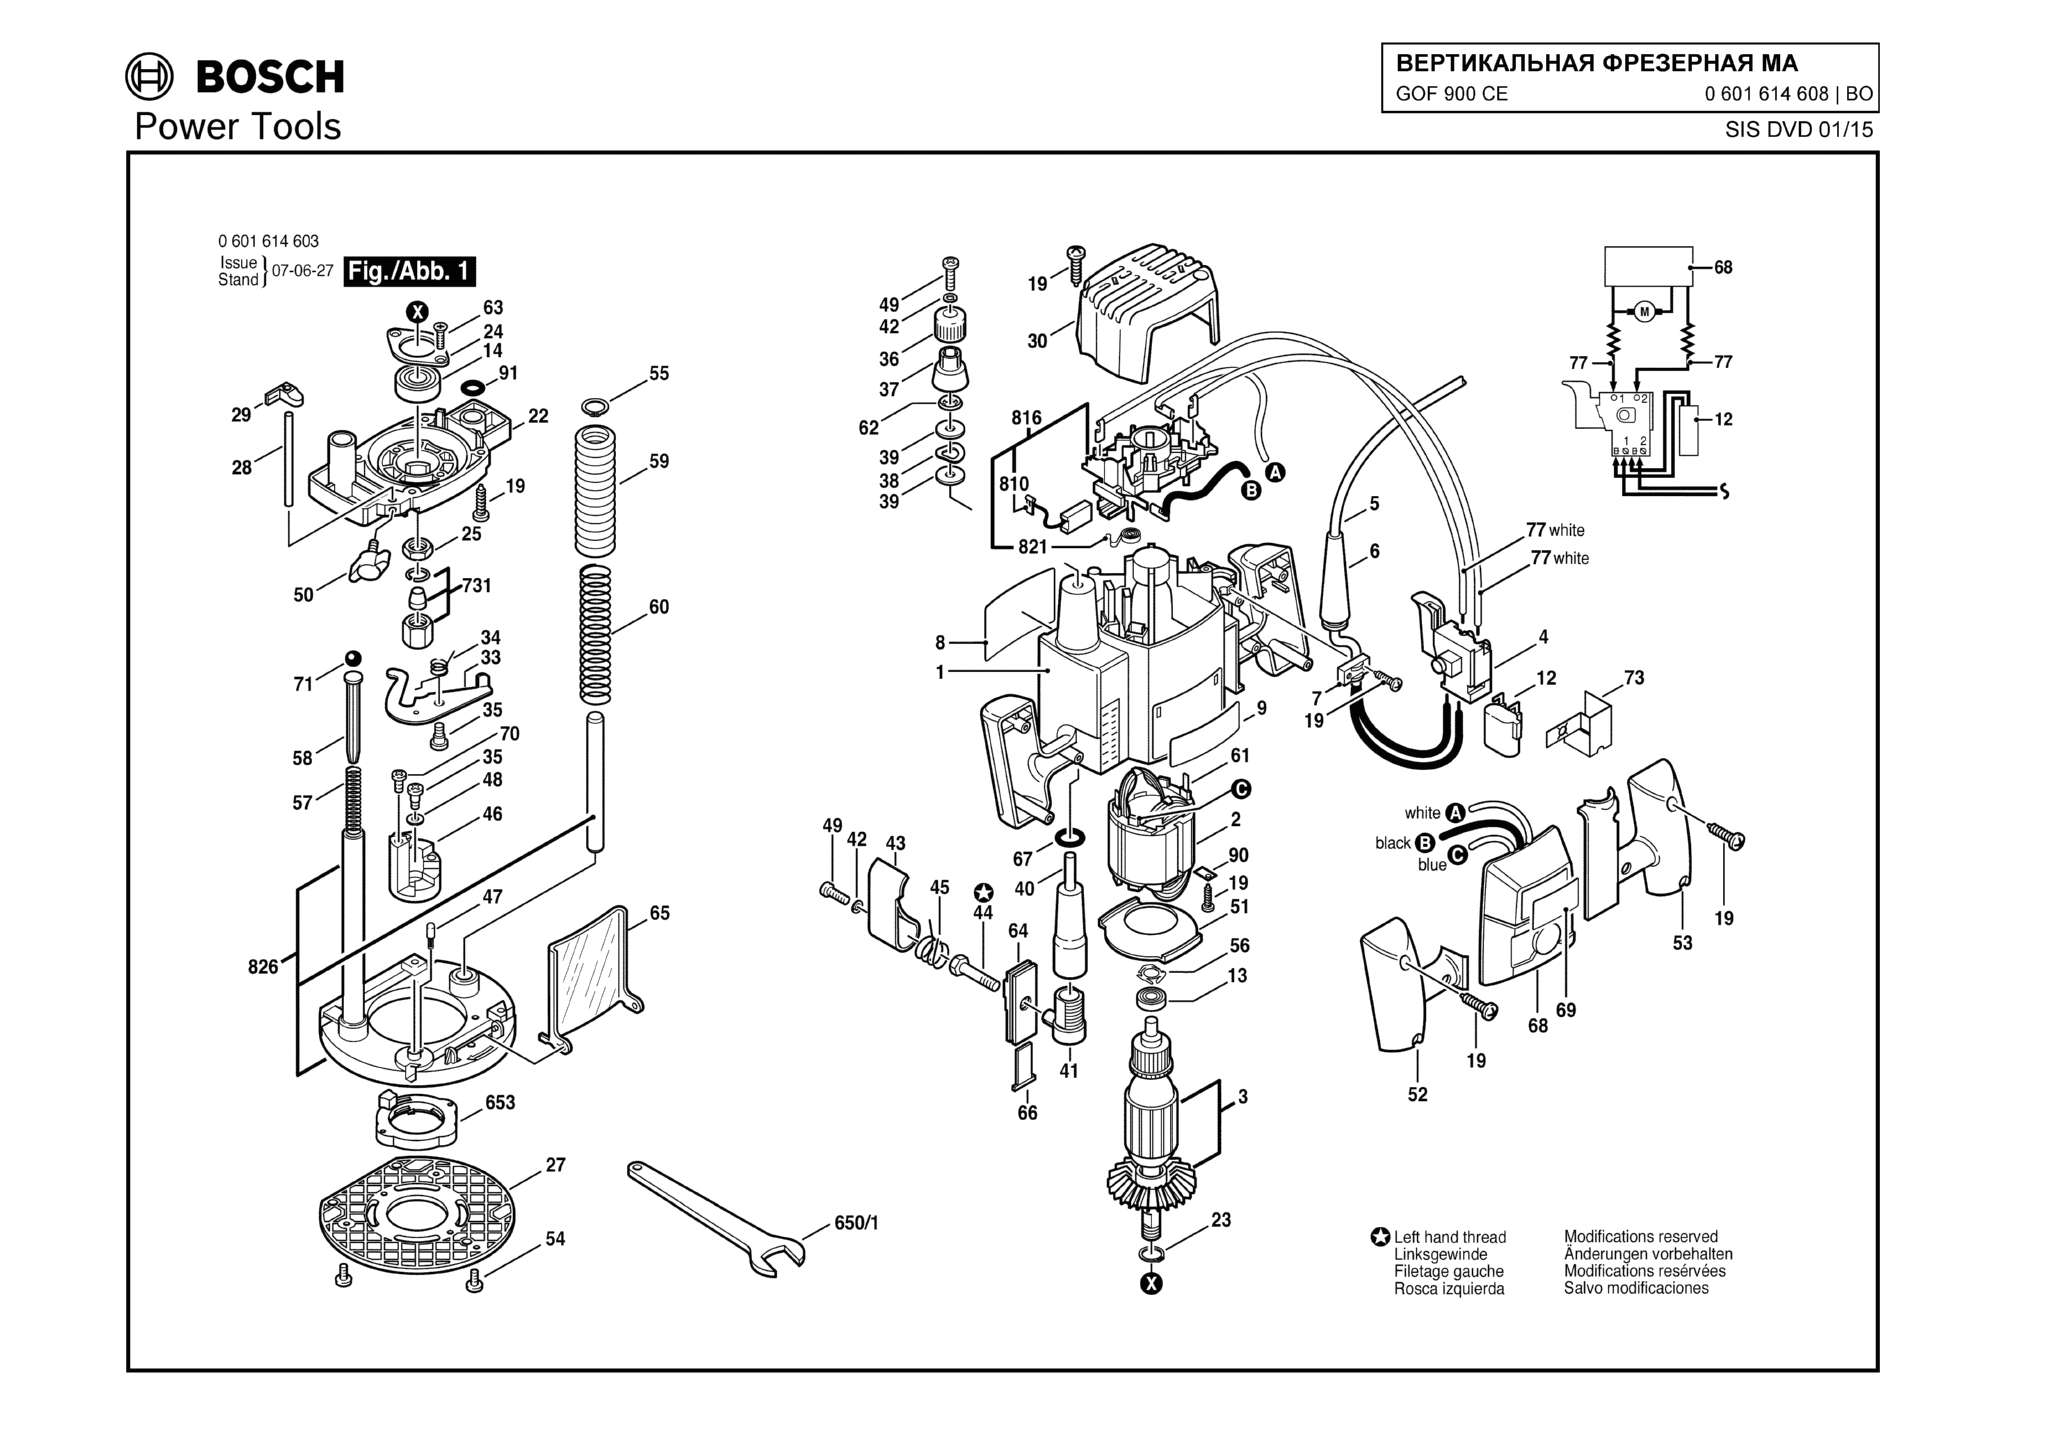 Запчасти, схема и деталировка Bosch GOF 900 CE (ТИП 0601614608)